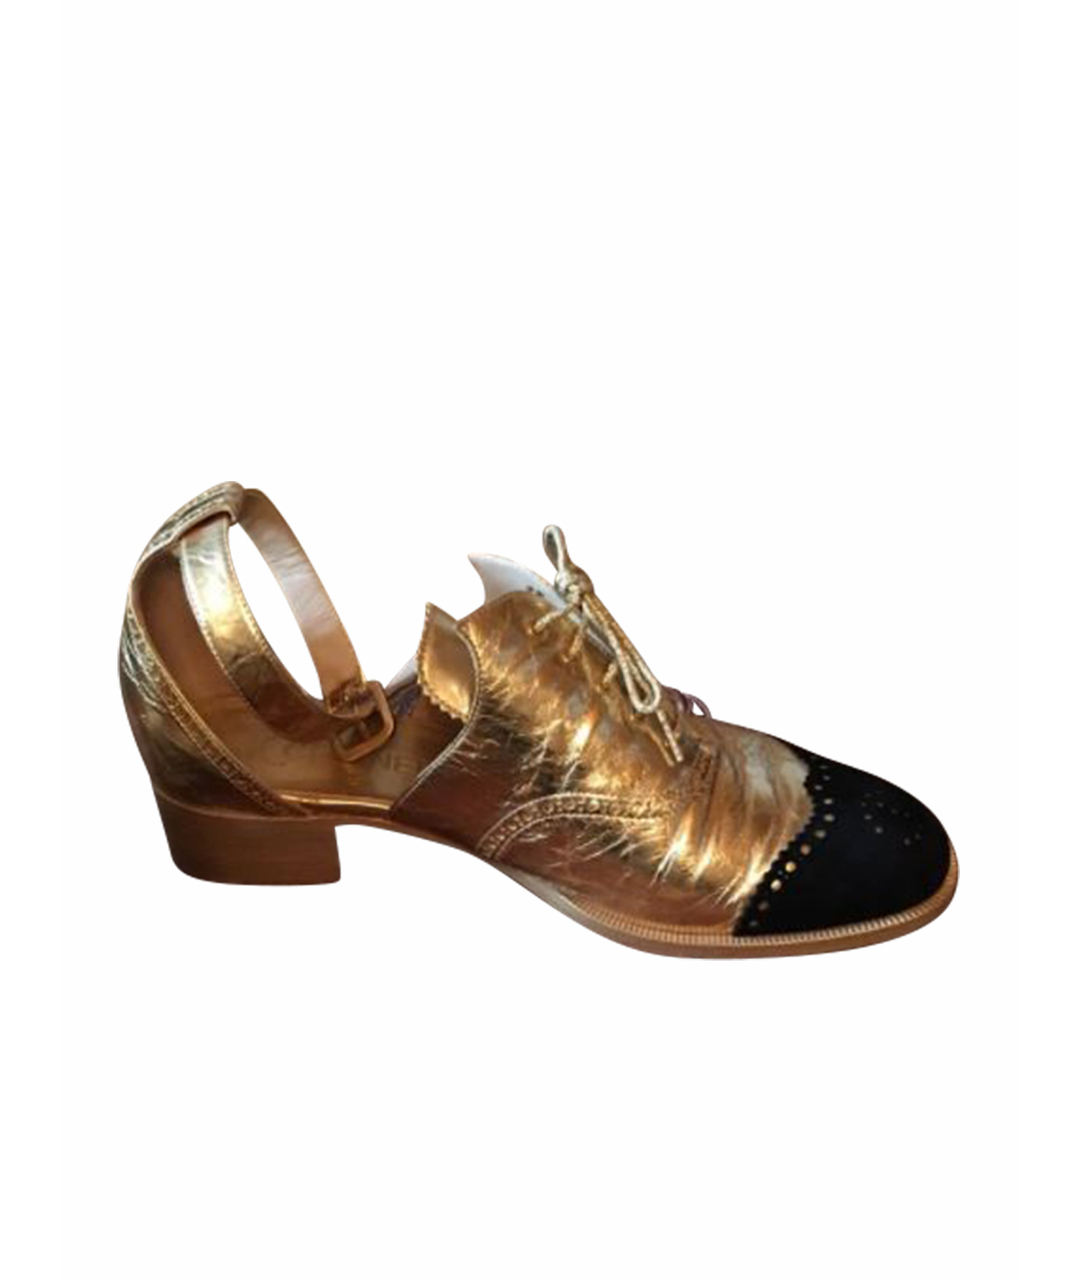 CHANEL PRE-OWNED Золотые кожаные сандалии, фото 1